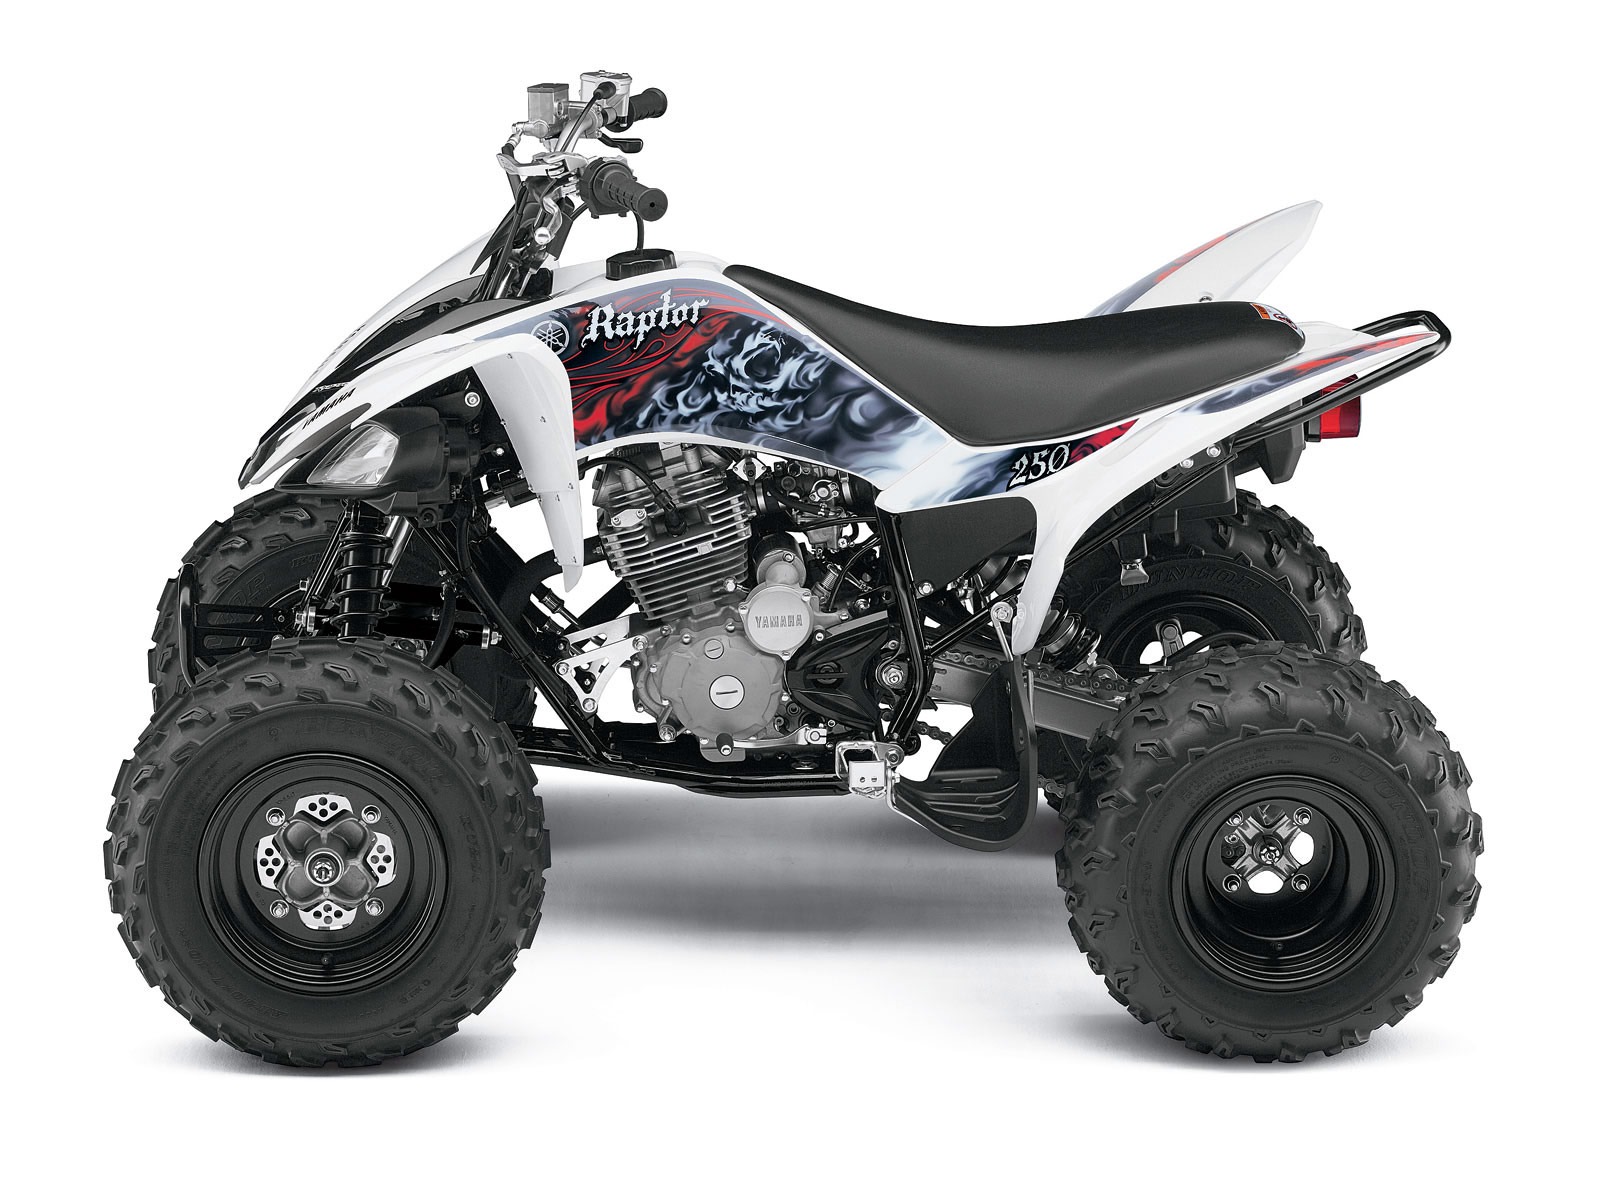 2011 YAMAHA Raptor 250 ATV Wallpapers, specifications